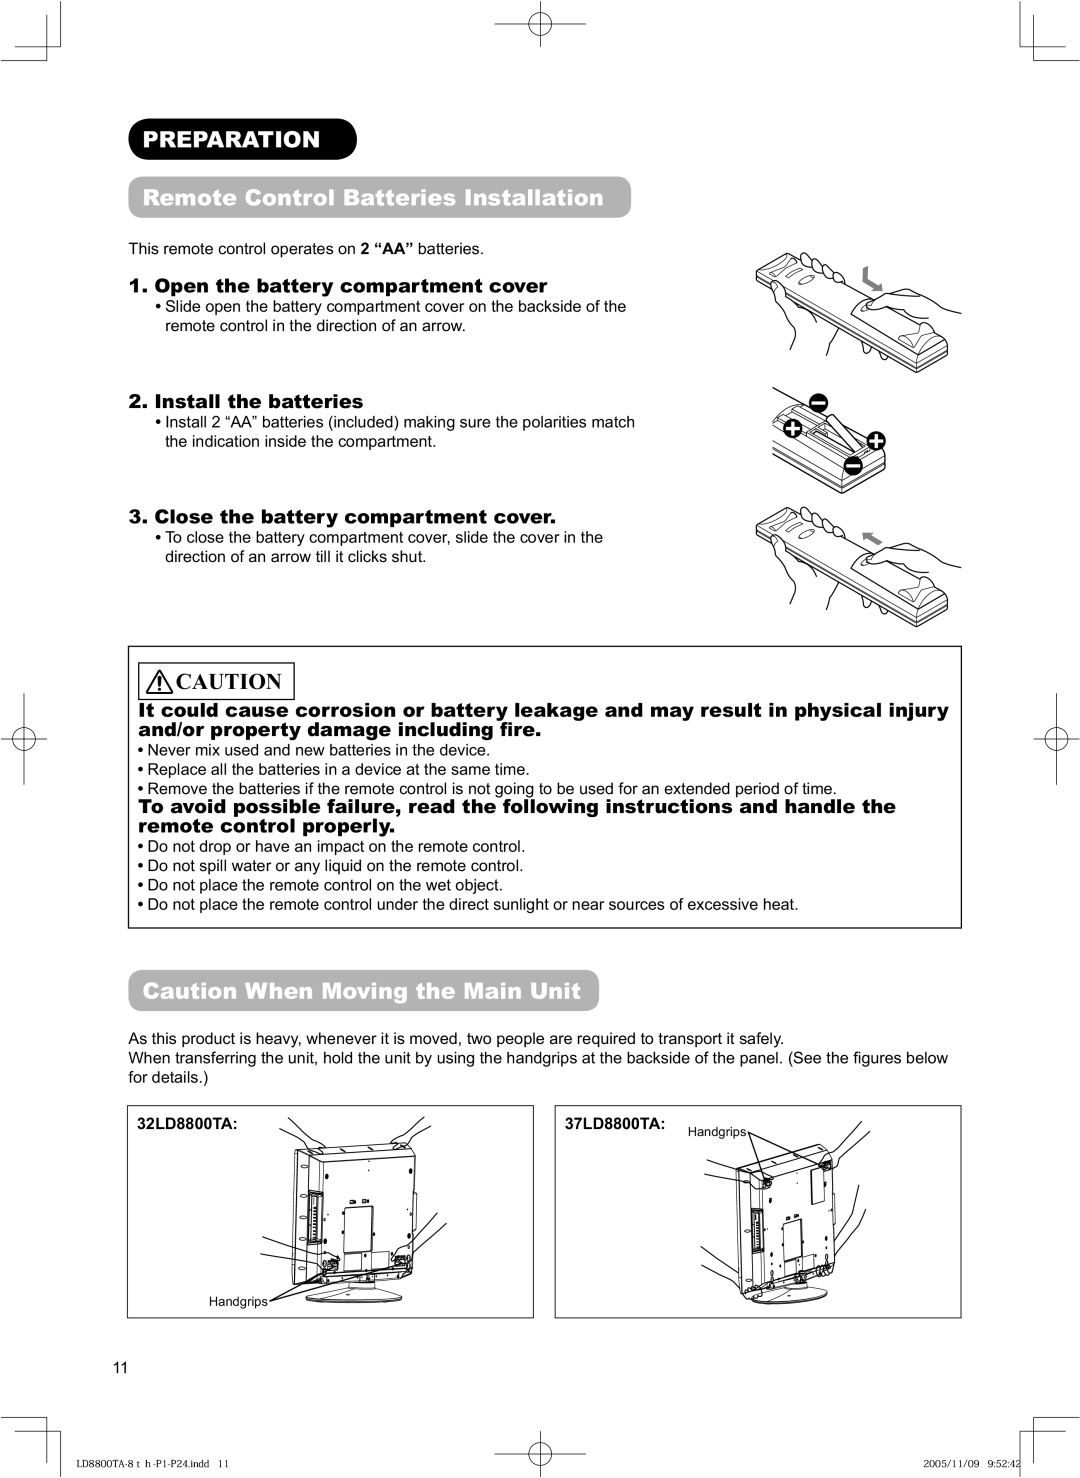 Hitachi 32LD8800TA PREPARATION Remote Control Batteries Installation, Caution When Moving the Main Unit, 37LD8800TA 